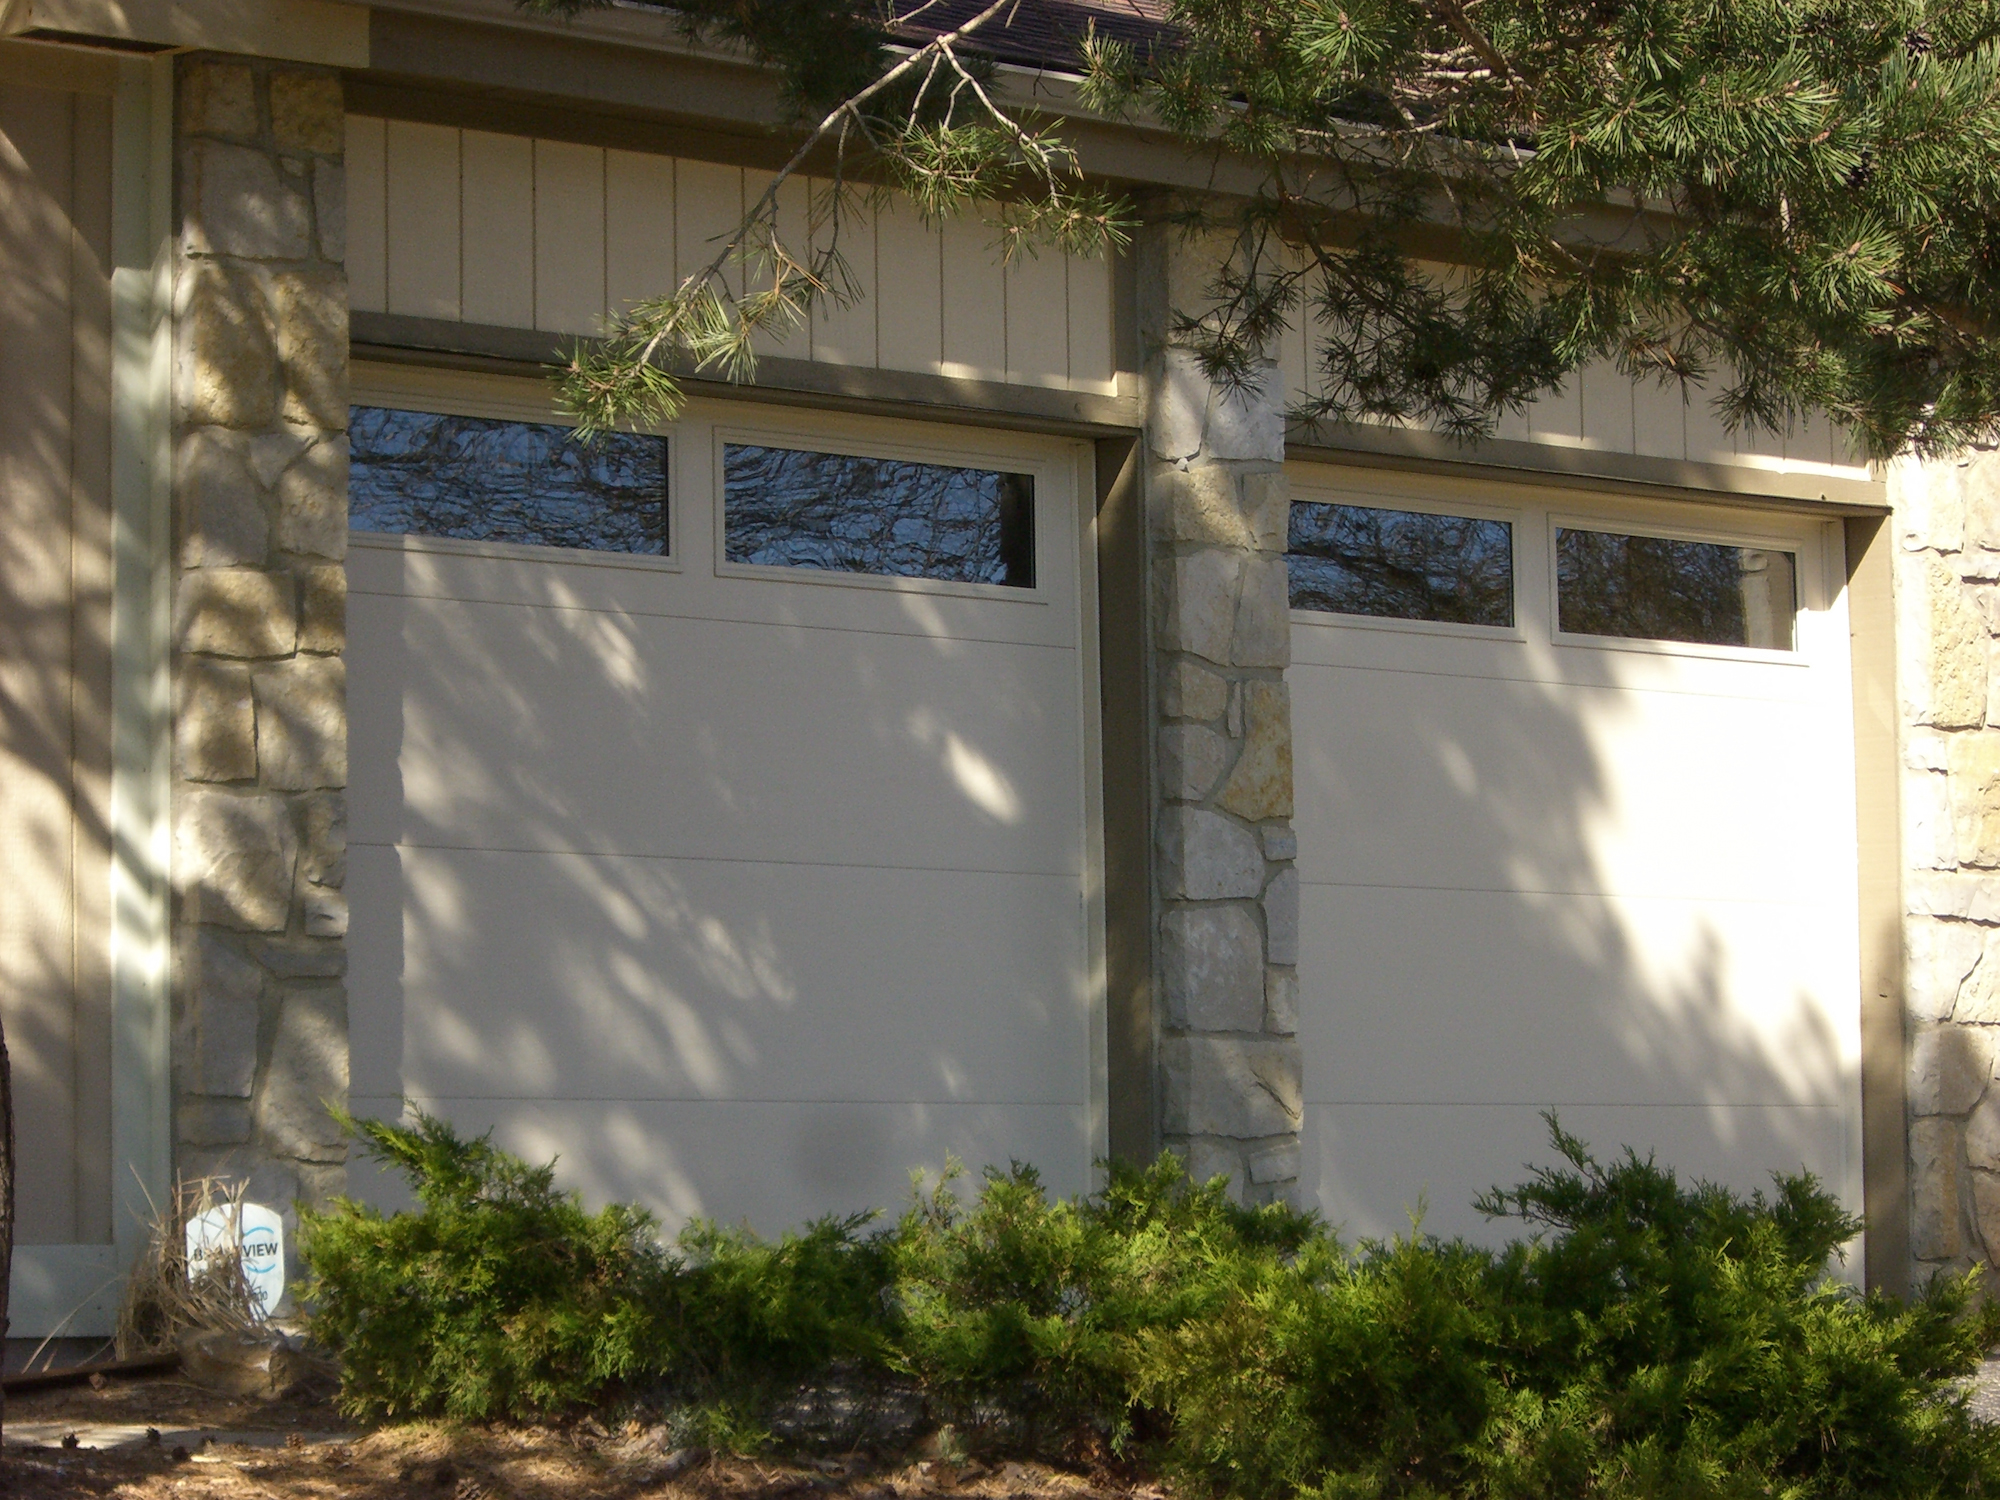 Flush Panel Garage Doors With Windows, Flush Panel Garage Door With Windows